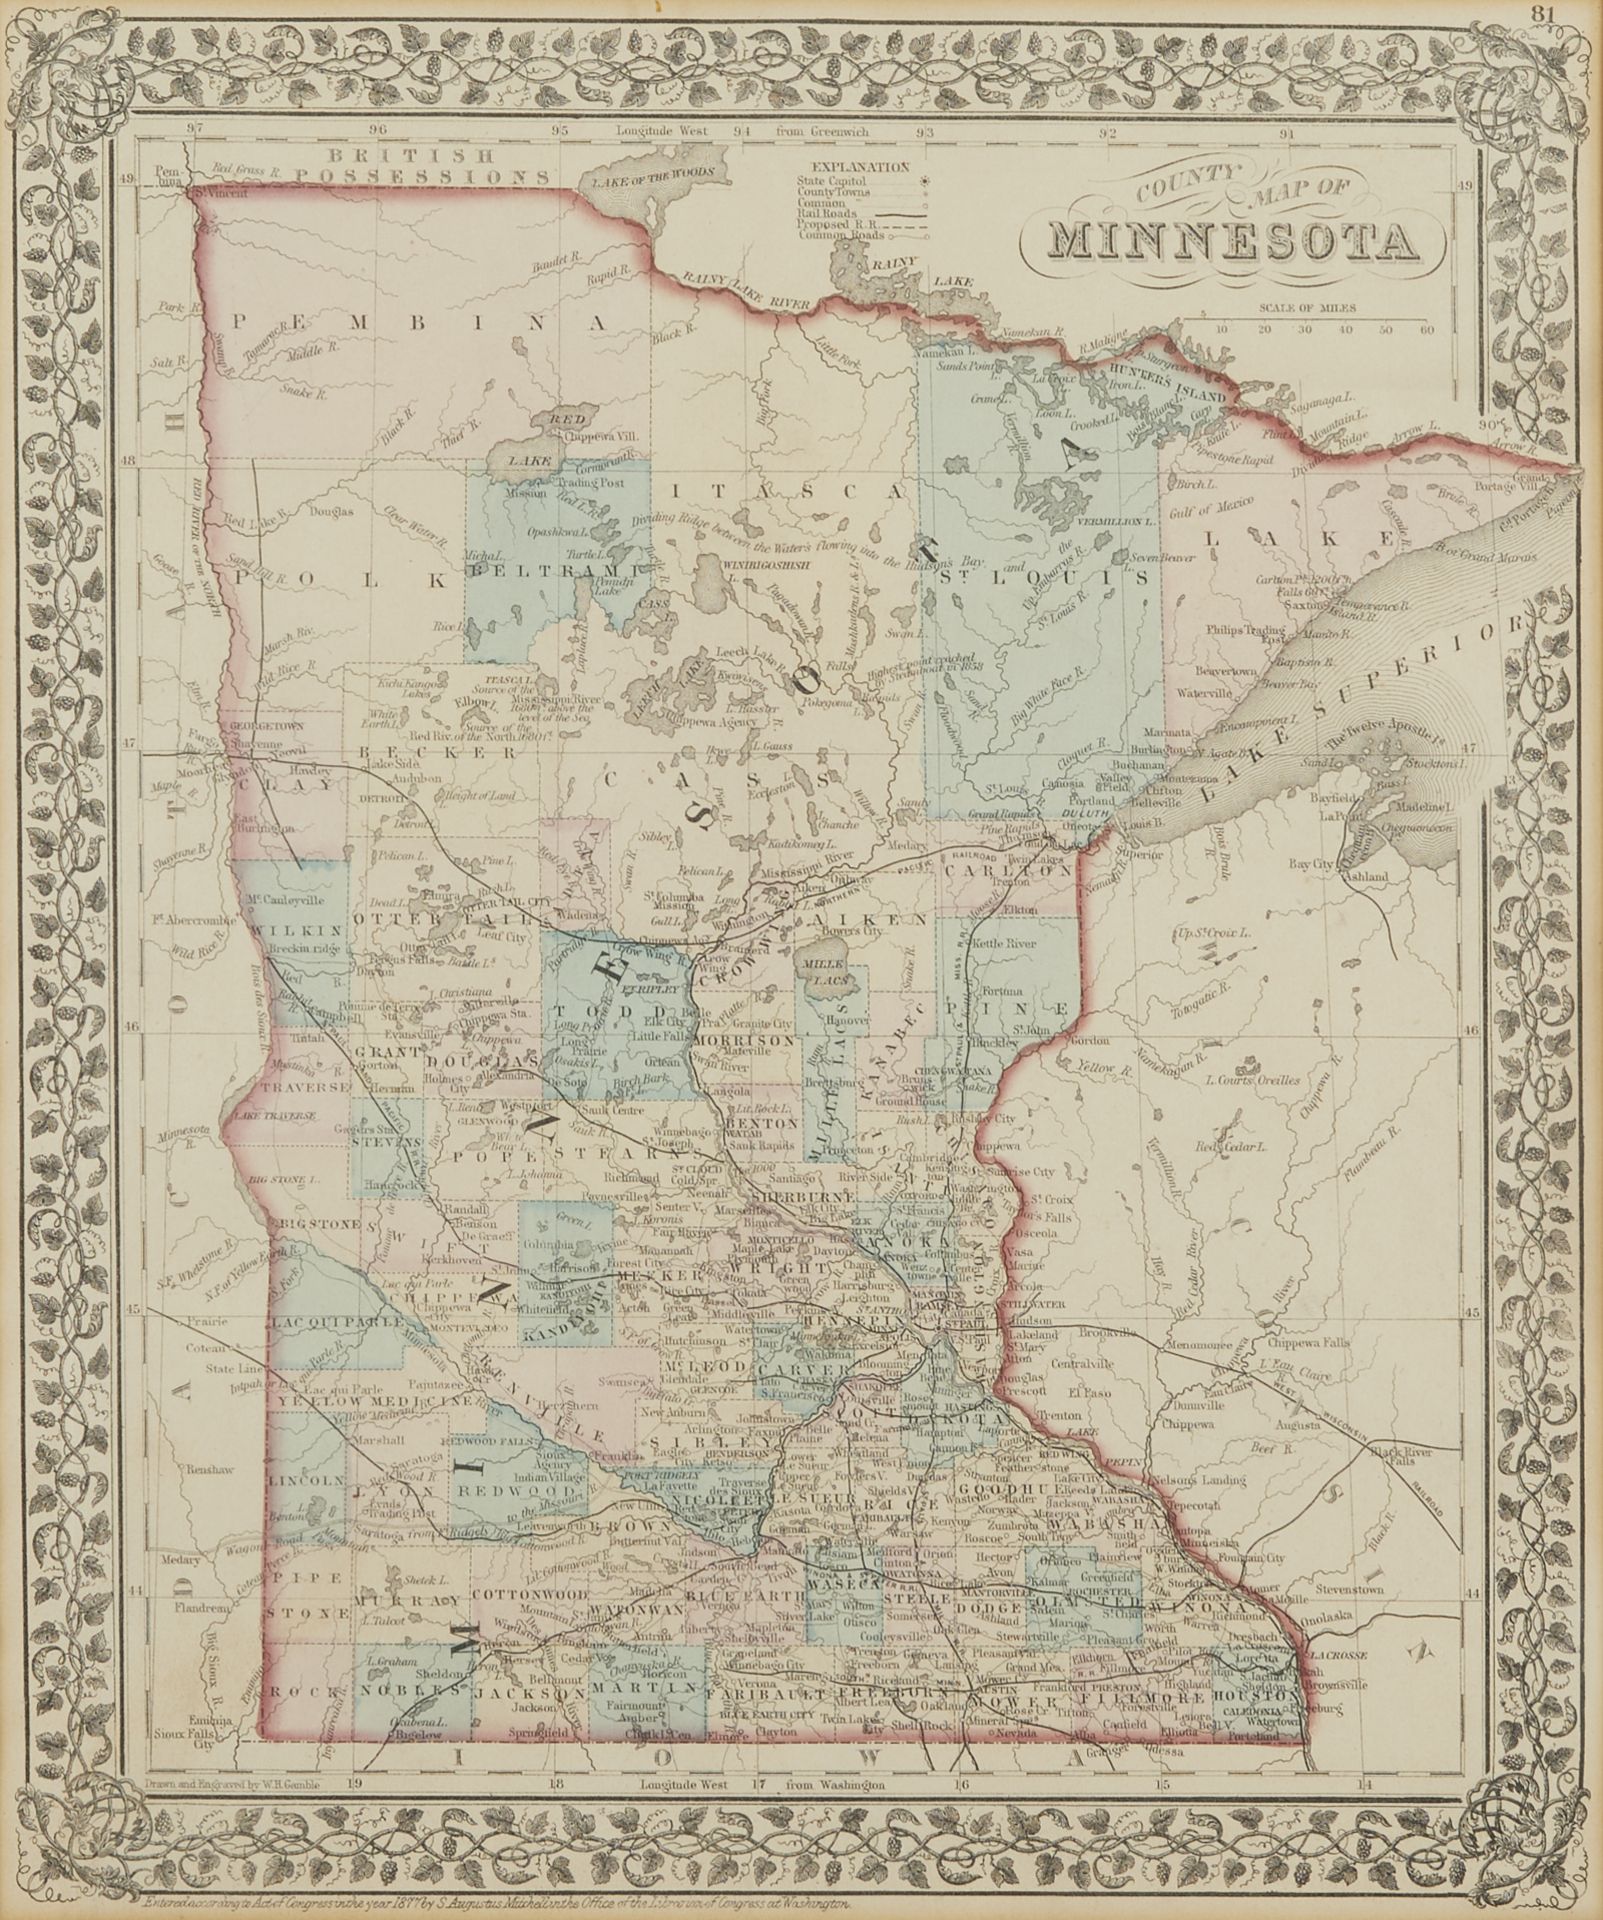 County Map of Minnesota ca. 1877